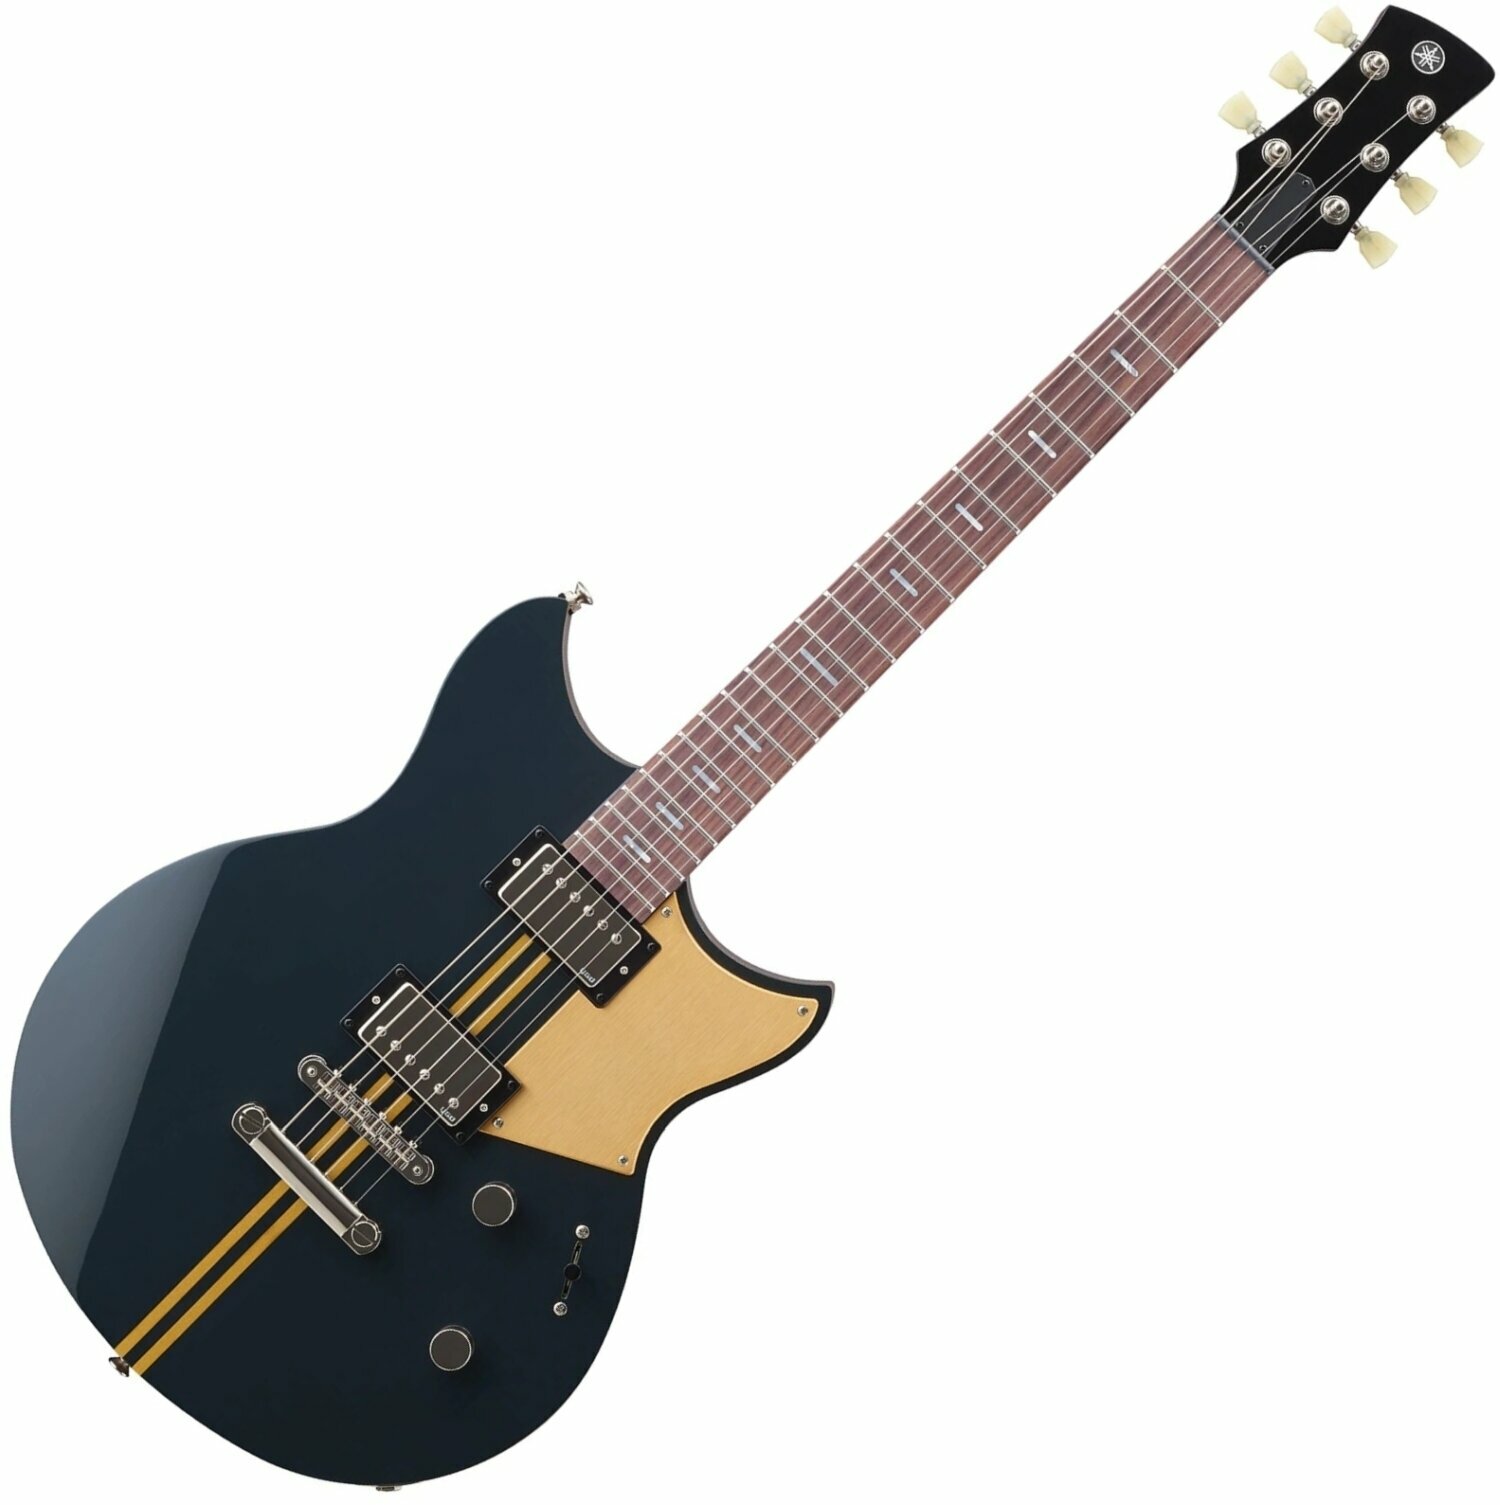 Electric guitar Yamaha RSP20X Rusty Burst Charcoal